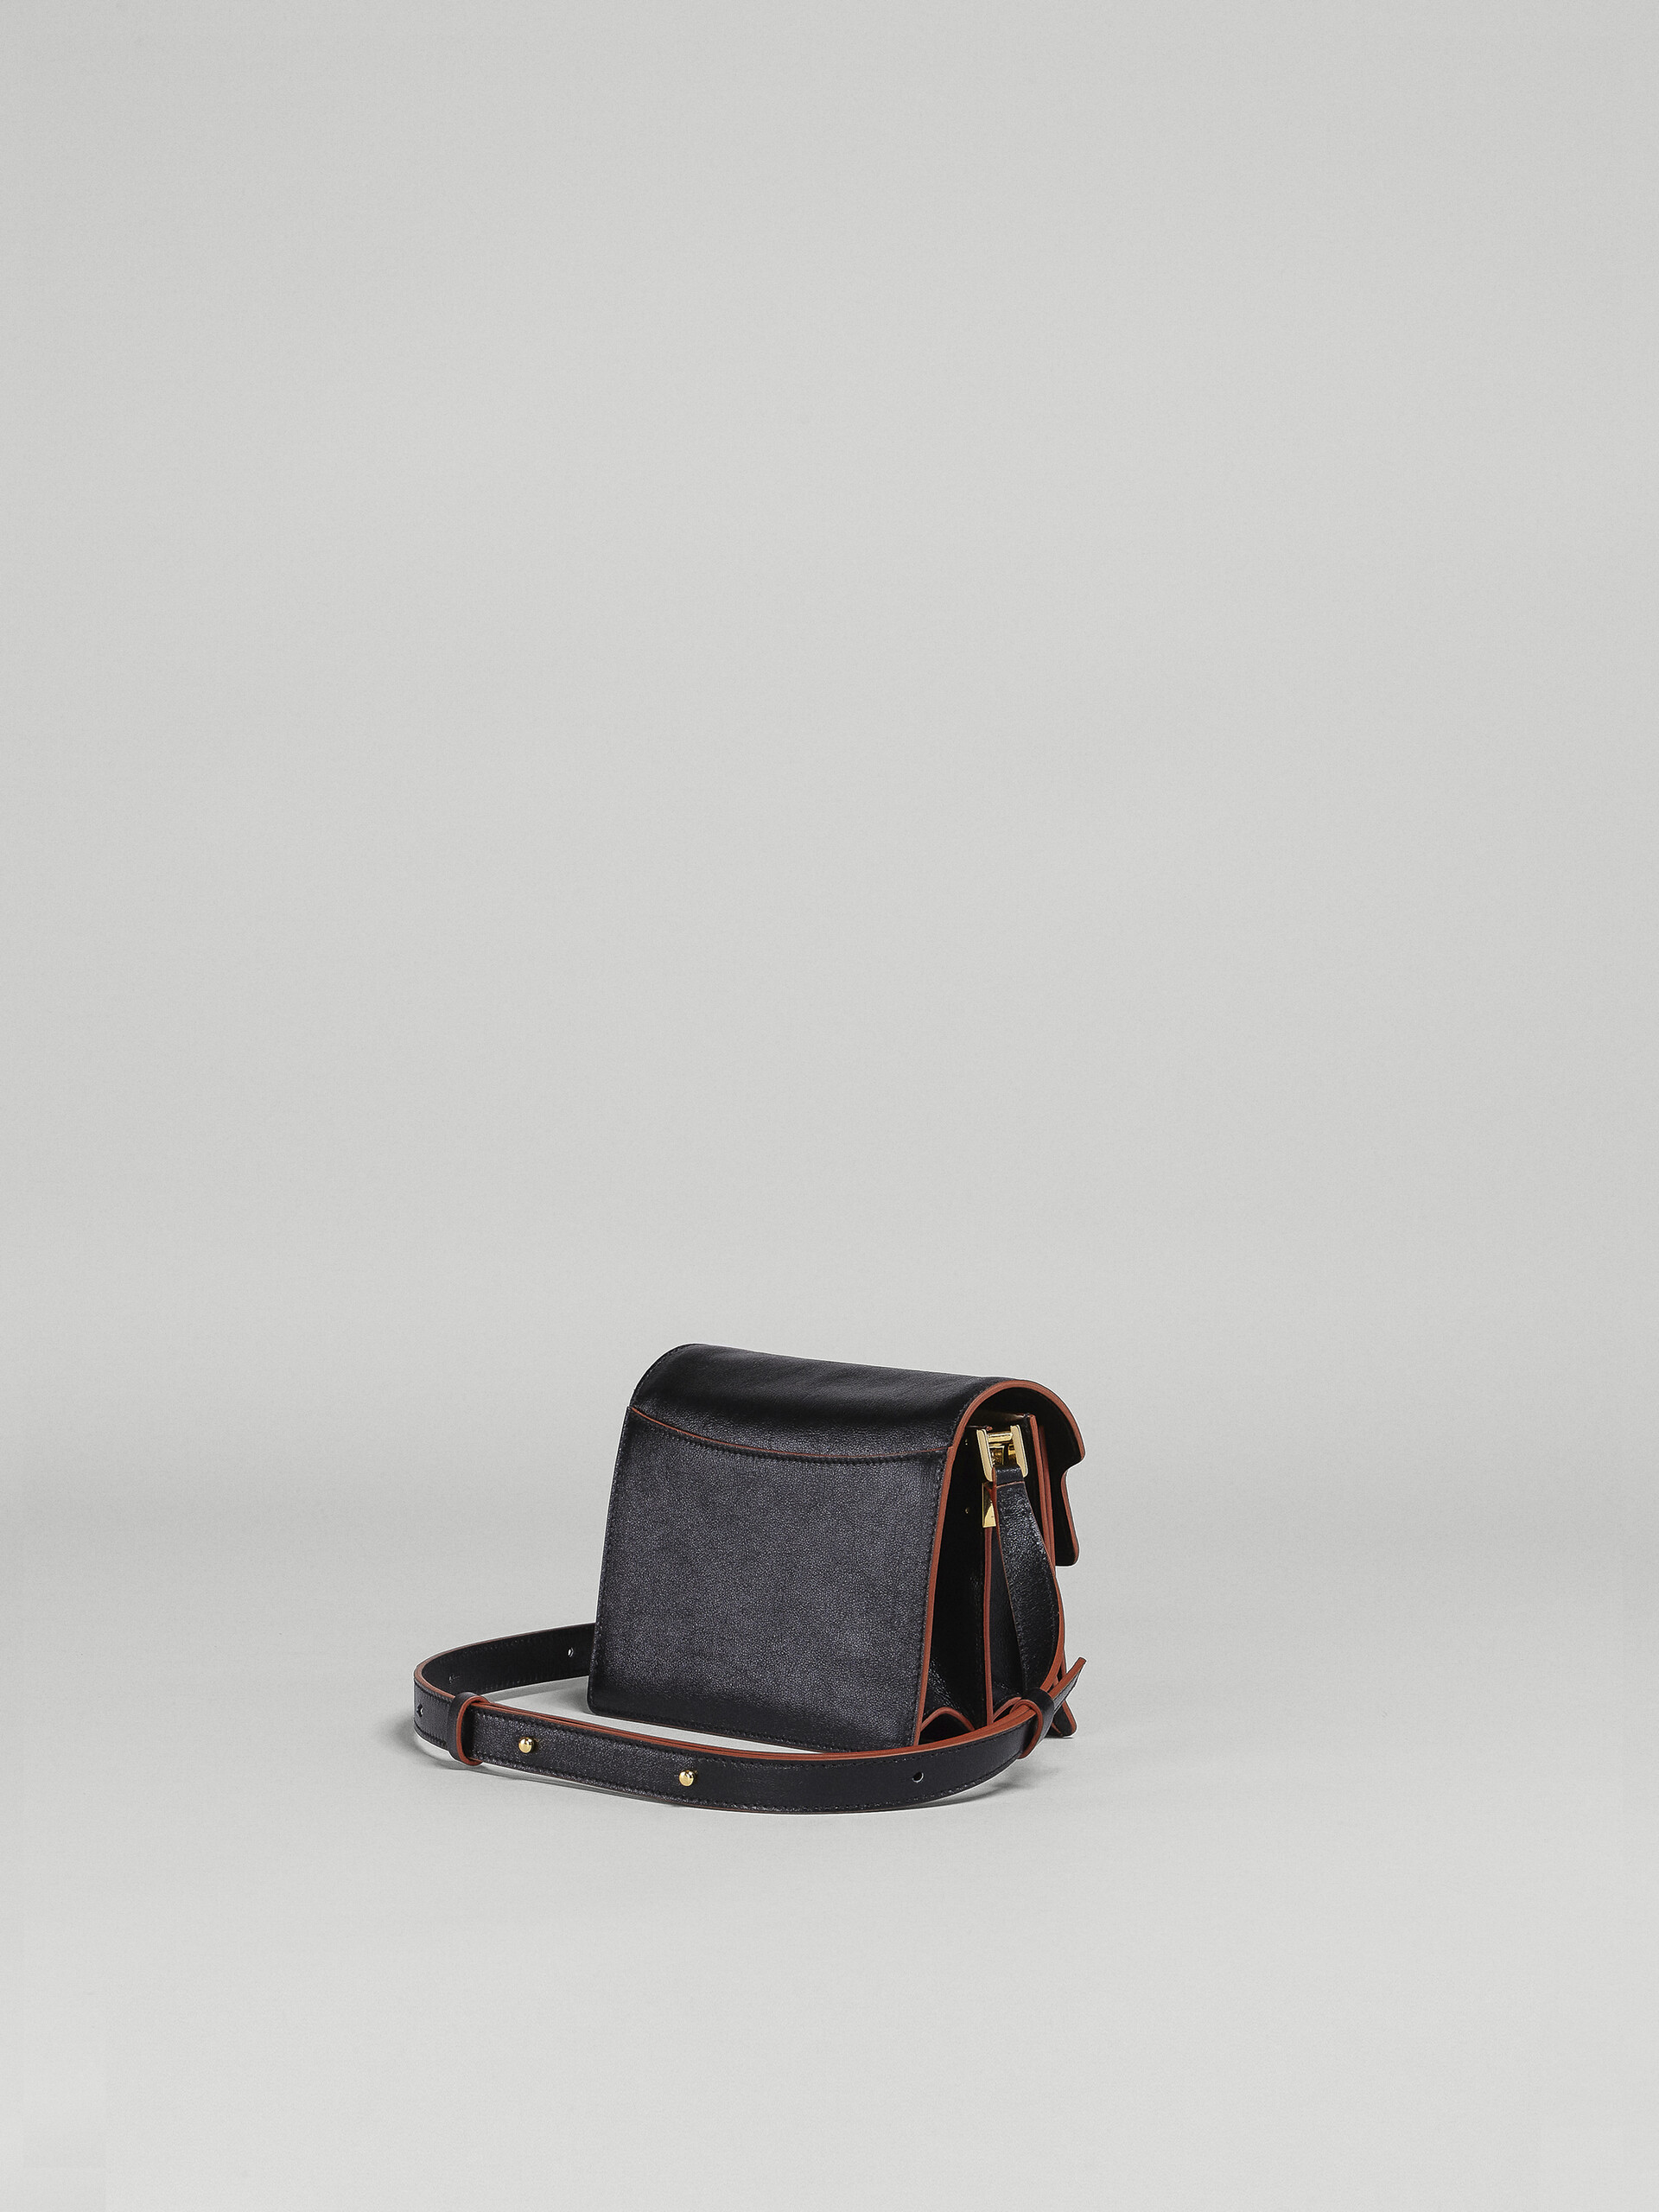 TRUNK SOFT mini bag in pink leather - Shoulder Bags - Image 3